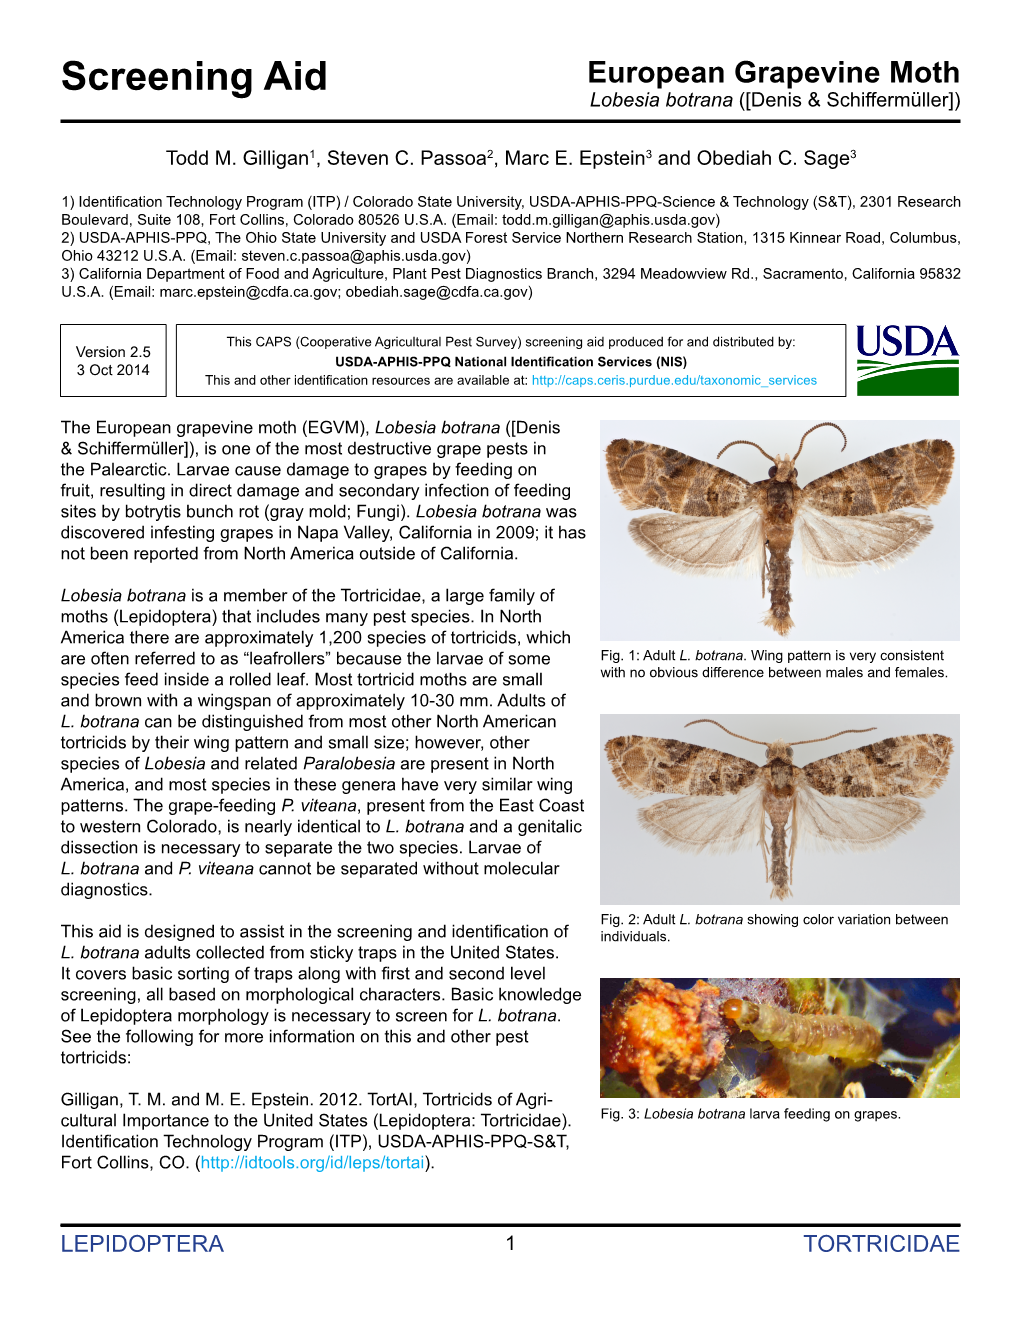 European Grapevine Moth Screening Aid Lobesia Botrana ([Denis & Schiffermüller])